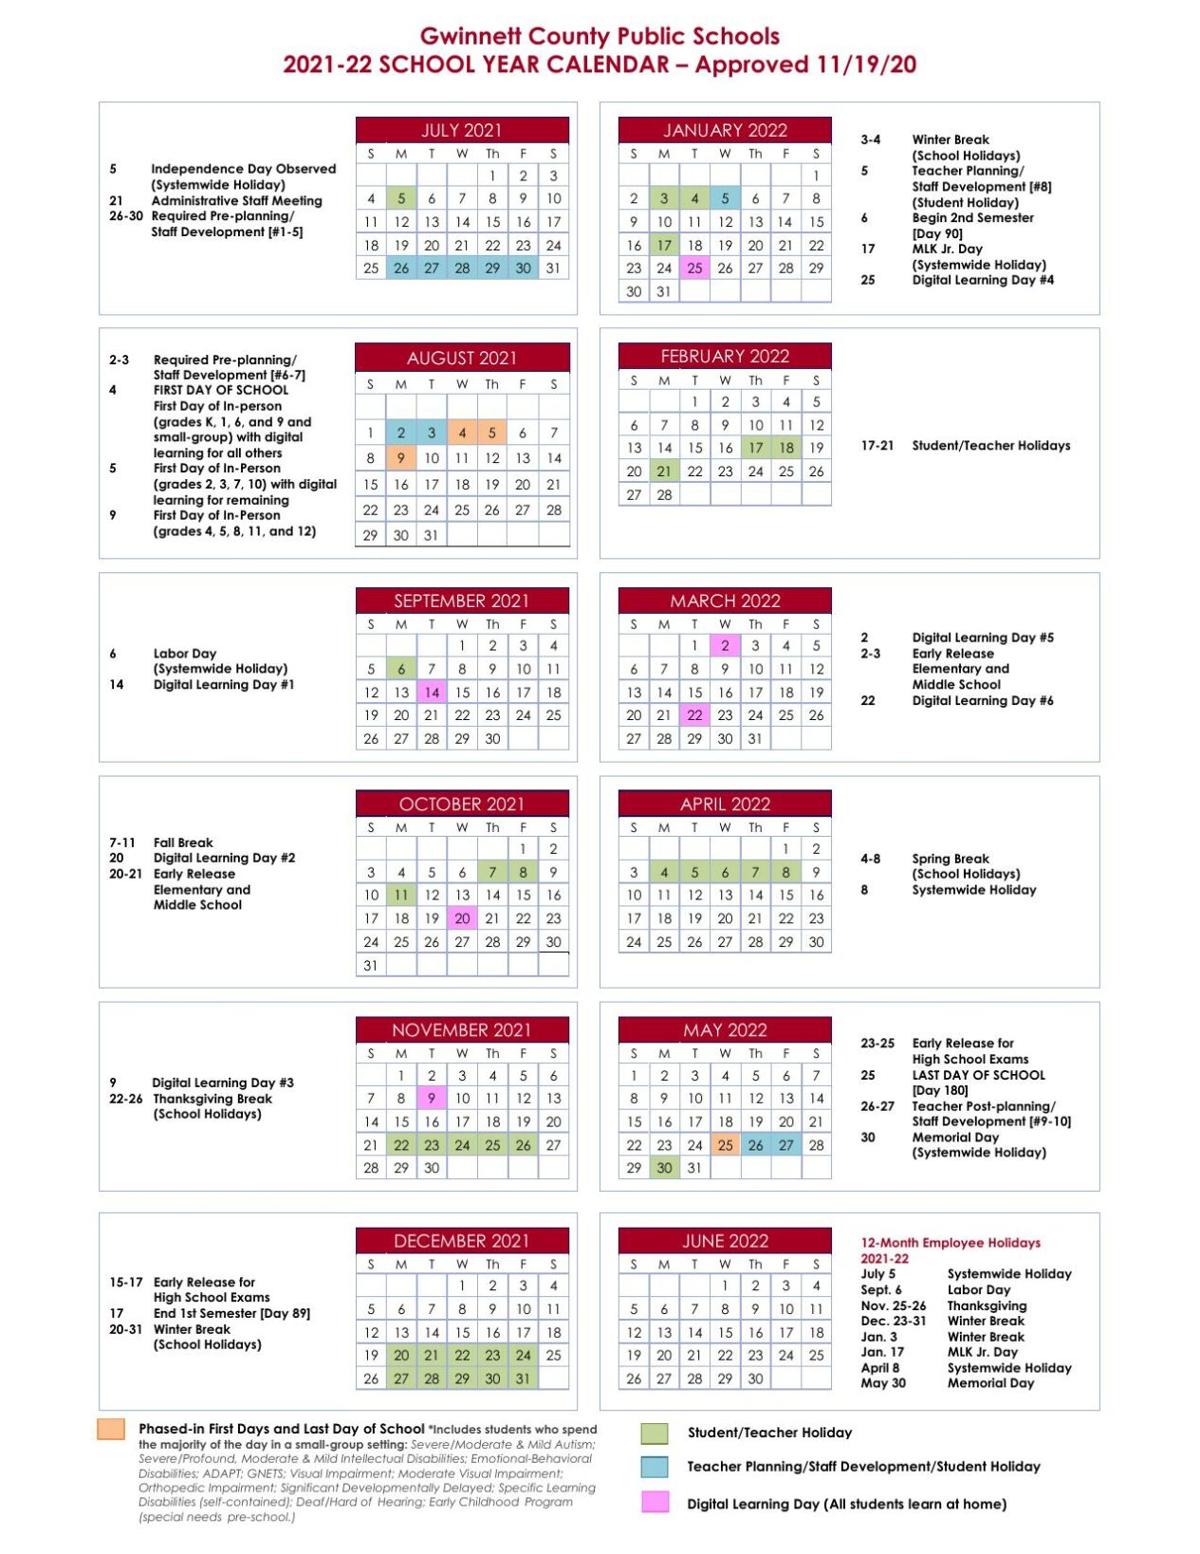 Gwinnett County Calendar 2022 Gwinnett County Public Schools' 2021-2022 School Year Calendar | |  Gwinnettdailypost.com